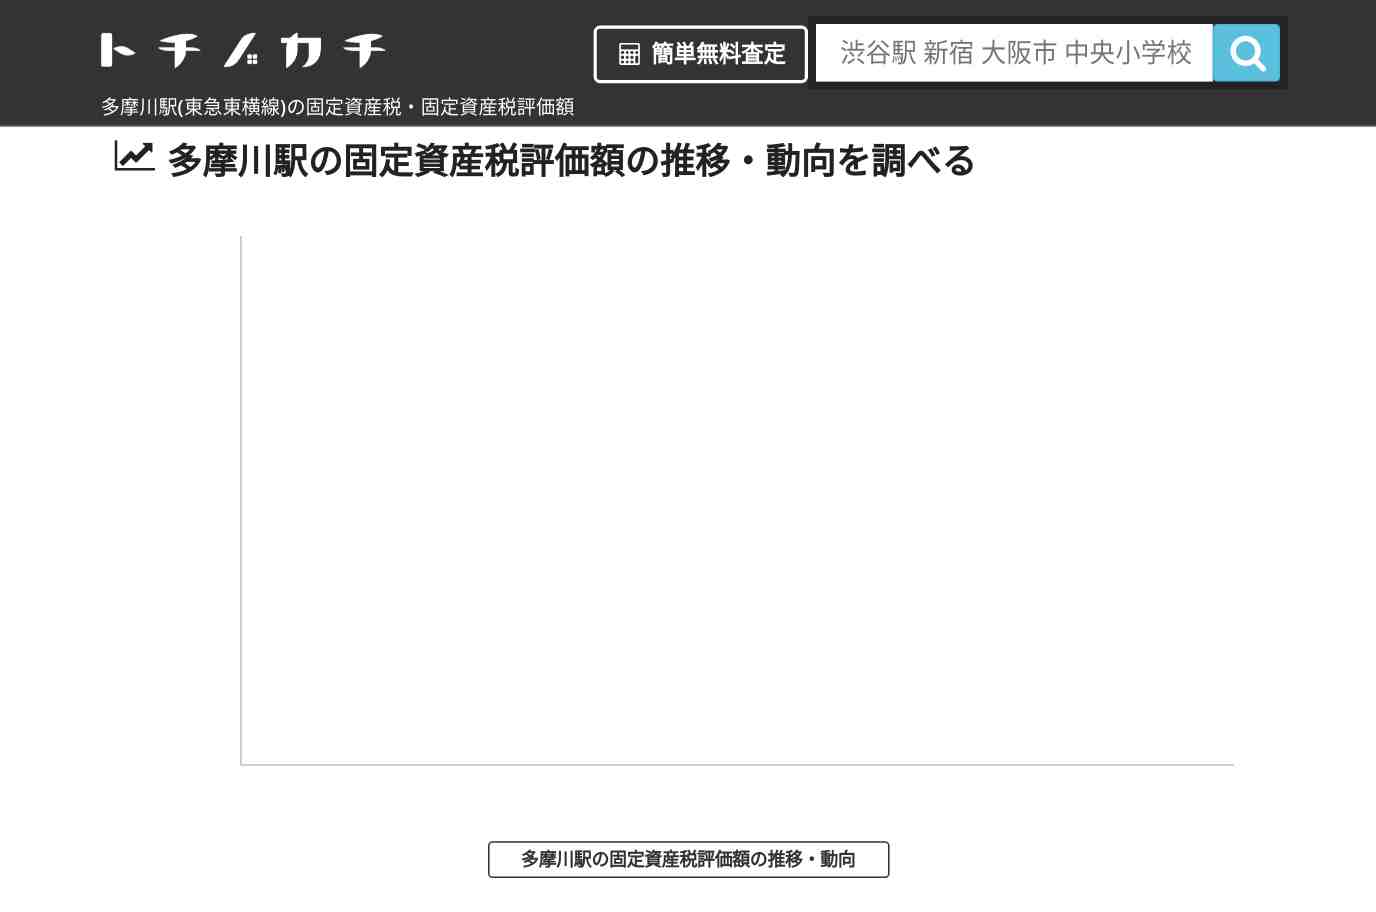 多摩川駅(東急東横線)の固定資産税・固定資産税評価額 | トチノカチ